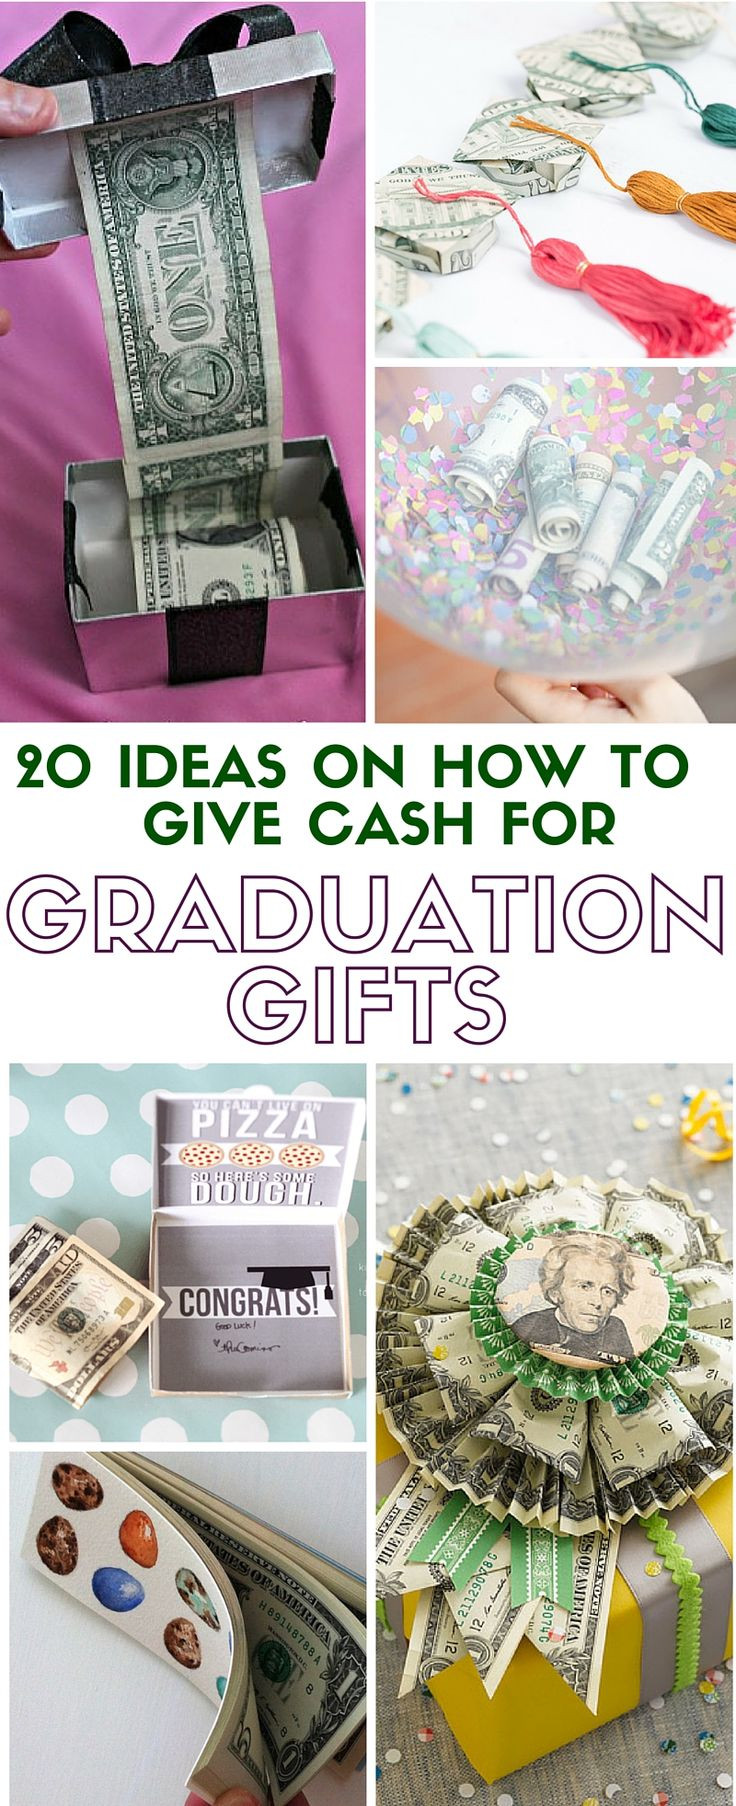 Graduation Gift Ideas Pinterest
 675 best graduation images on Pinterest